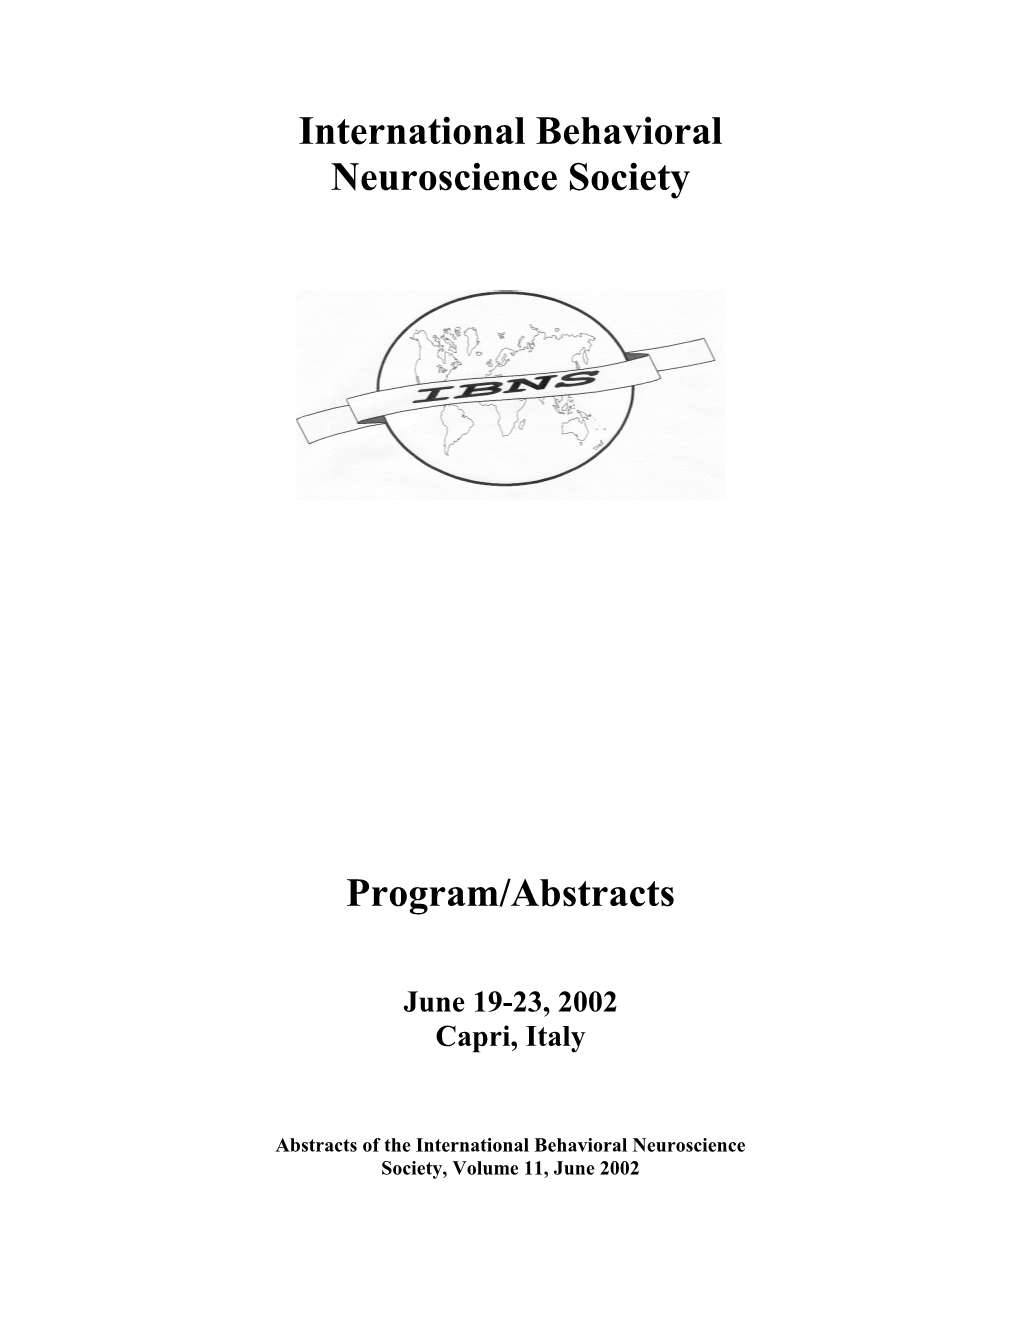 International Behavioral Neuroscience Society Program/Abstracts